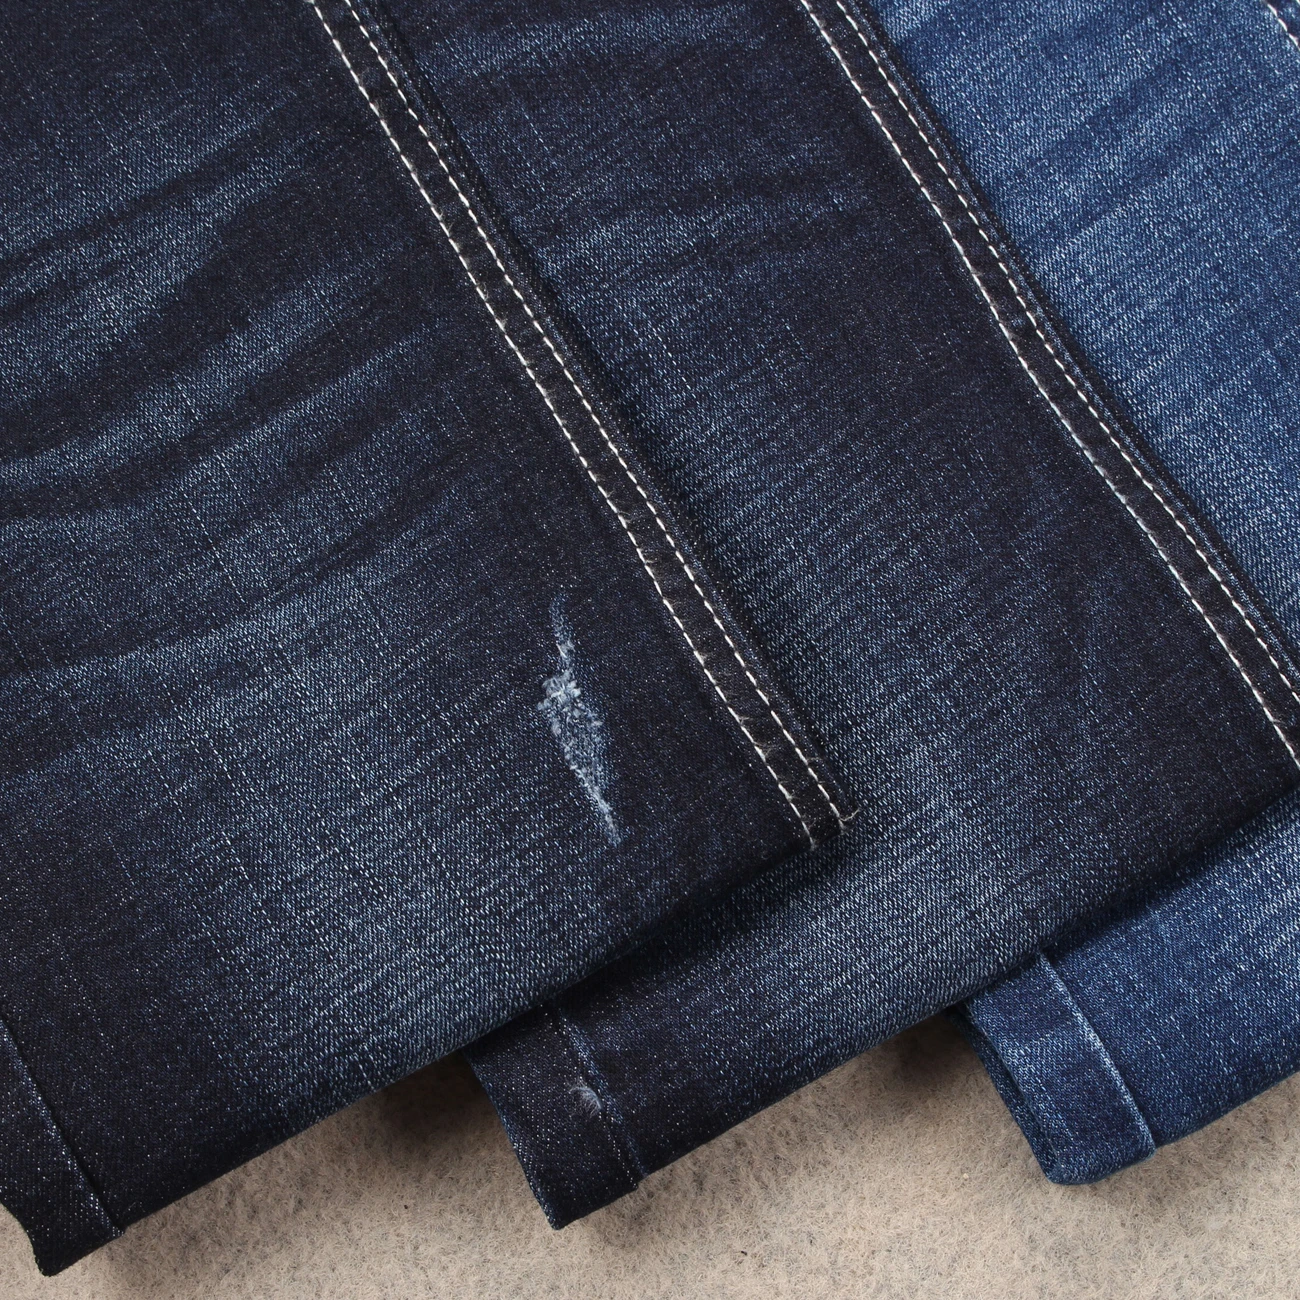 100*145cm Eelastic polyester cotton wash denim fabric jeans shirt clothing  bag cloth DIY Stretch denim fabric dress Handmade - AliExpress